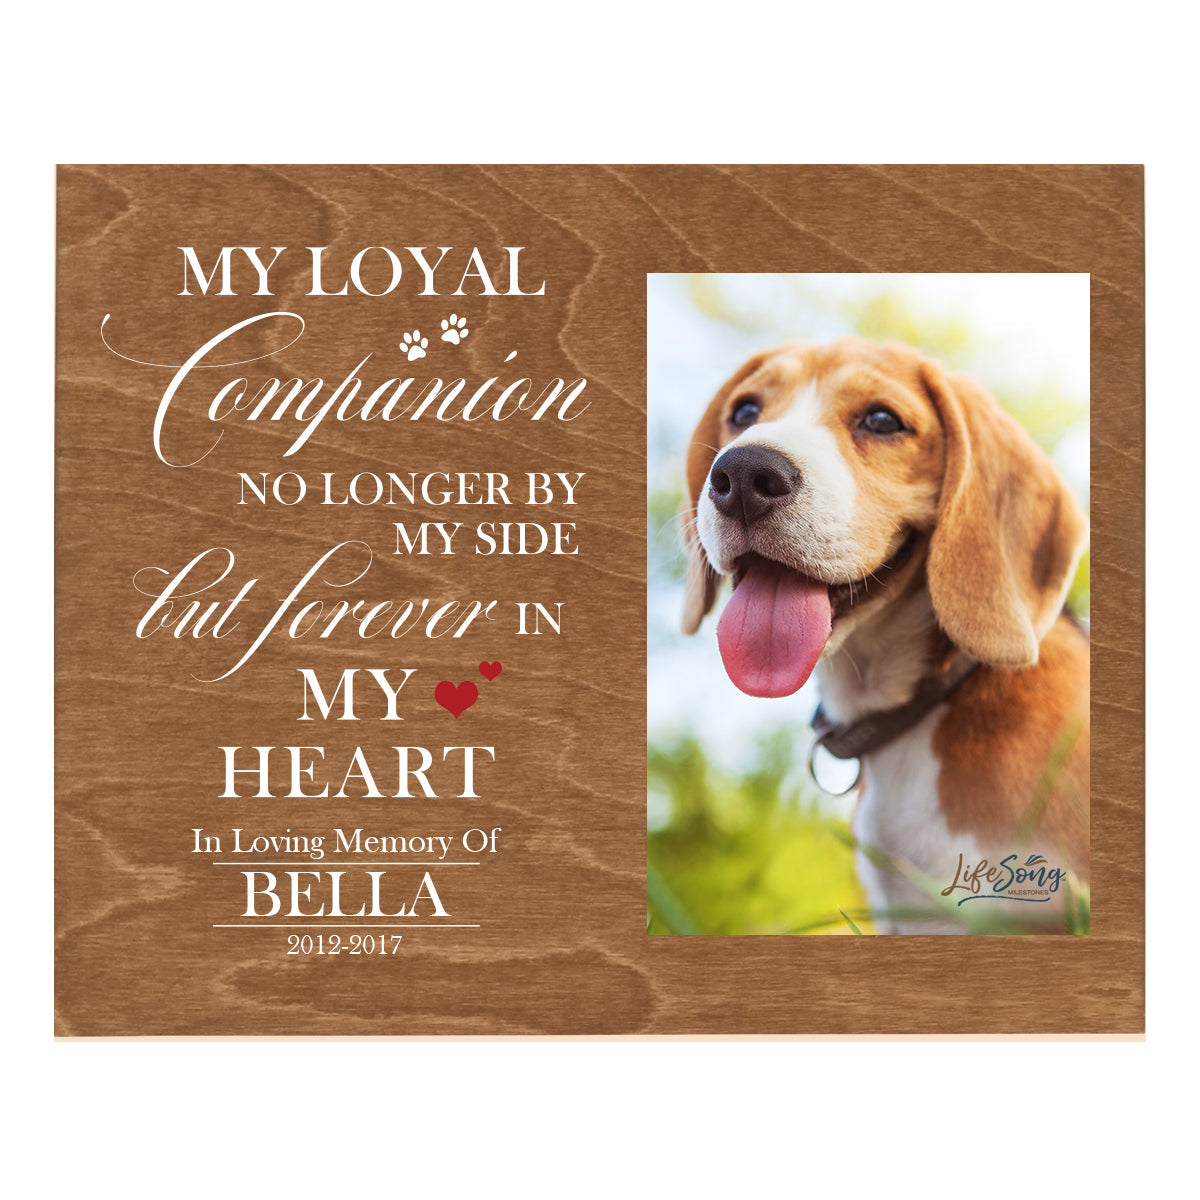 Pet Memorial Photo Wall Plaque Décor - My Loyal Companion